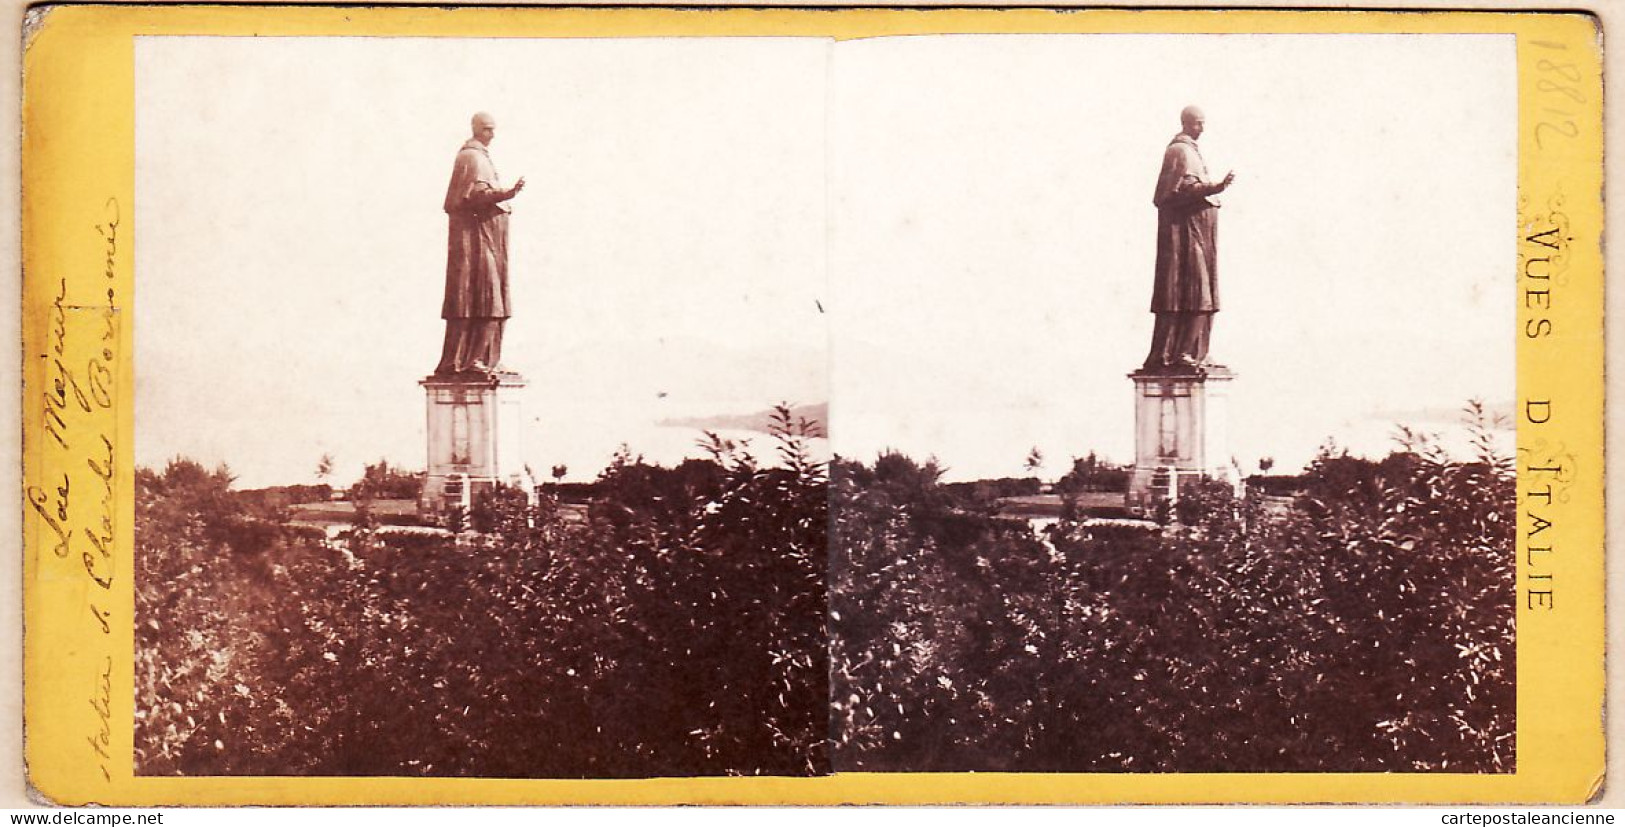 04562 / Fotografia Stereo 1865s Italia StatuaSanto LAC MAJEUR Statue De Saint-Charles-BORROMEE Sancarlone Vues Italie - Stereo-Photographie